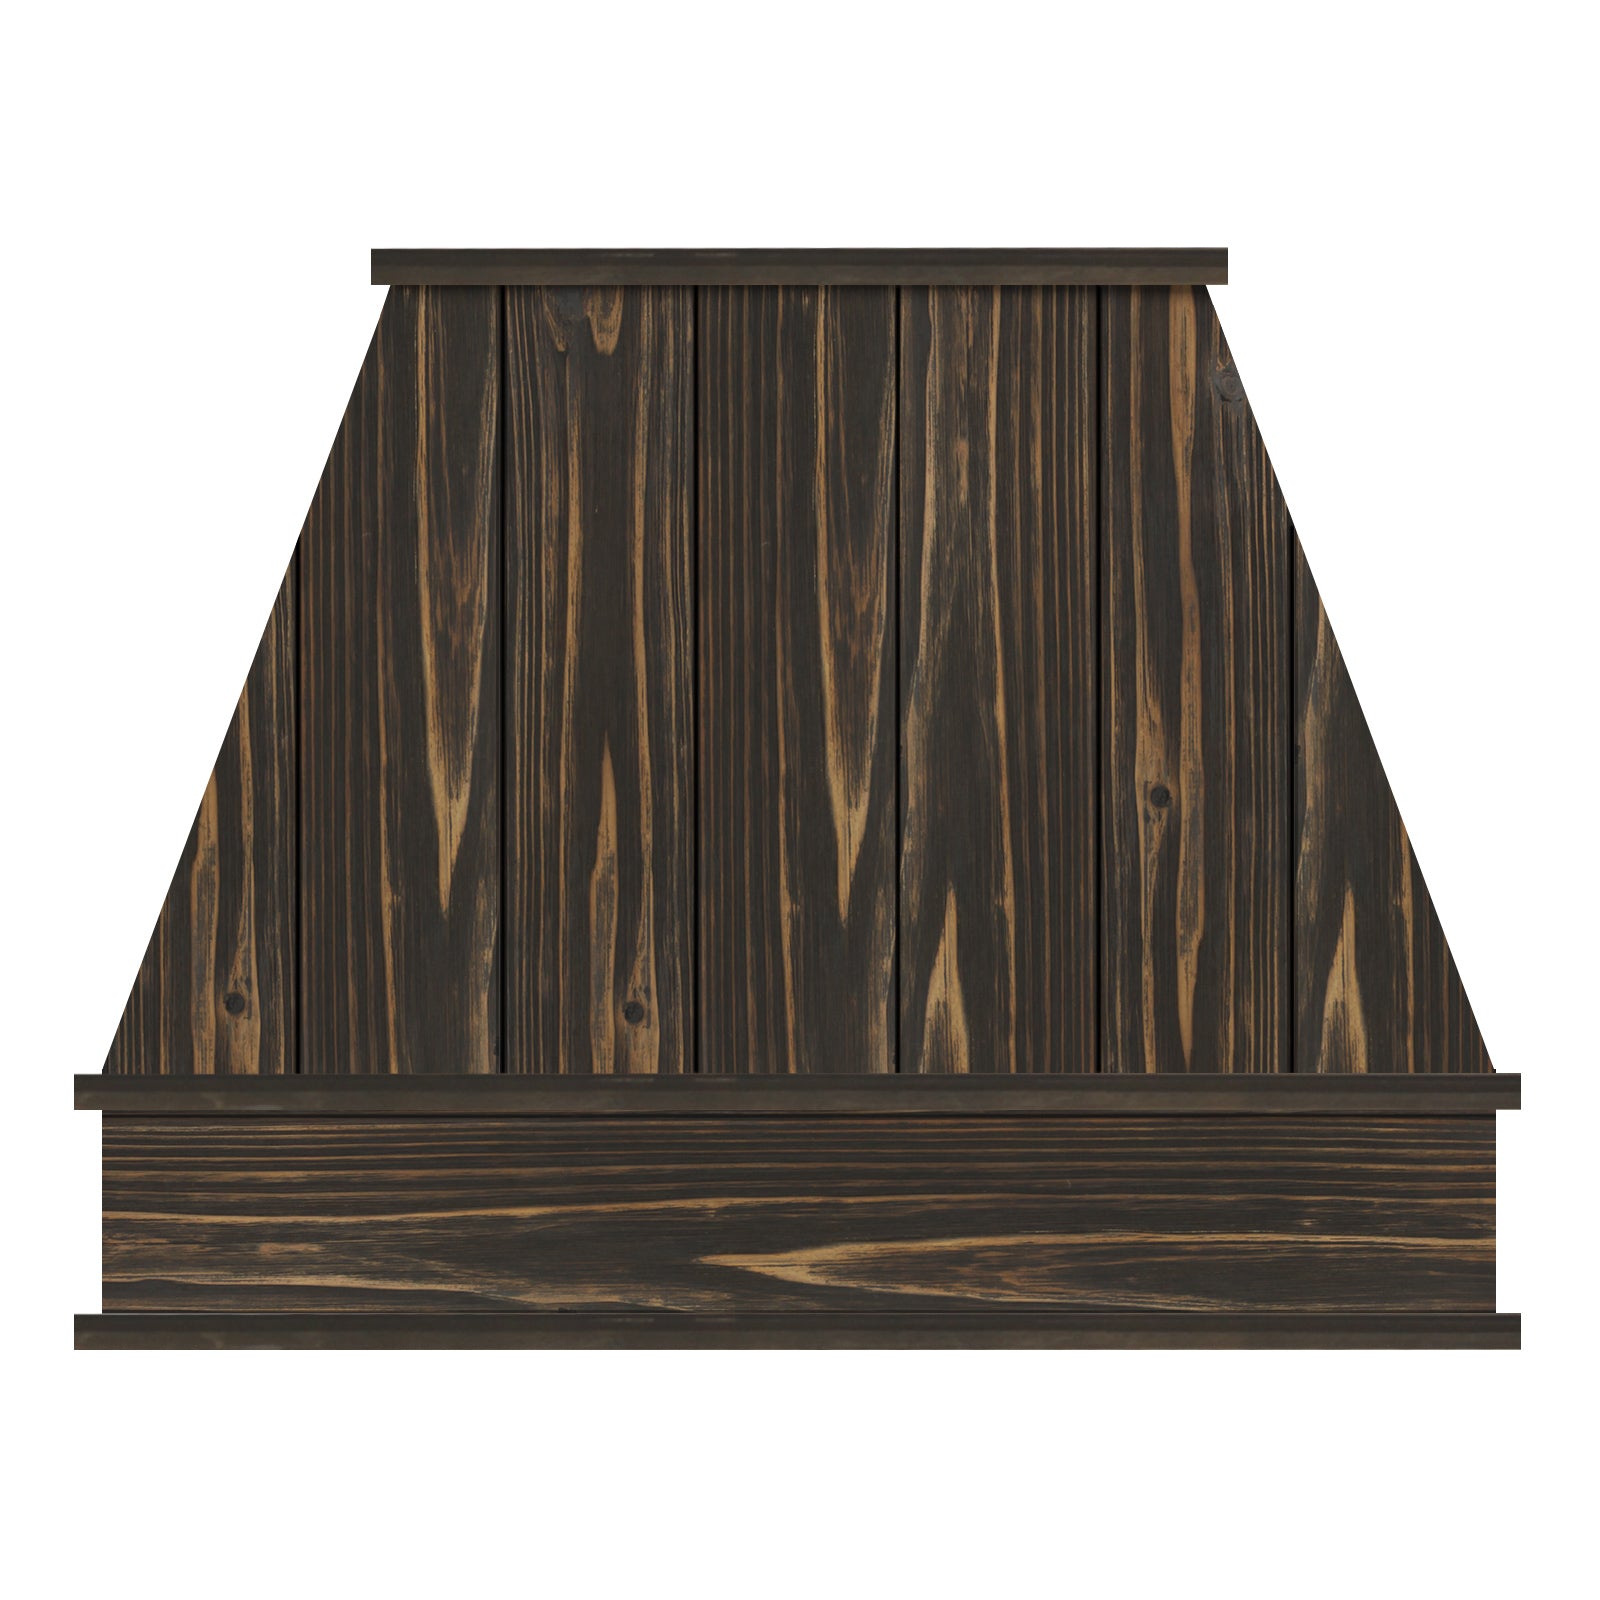 Custom Rustic Range Hood, Reclaimed Barn Wood Vent Hood with Insert Ventilator & Decorative Molding Trim, Craftsman A Series